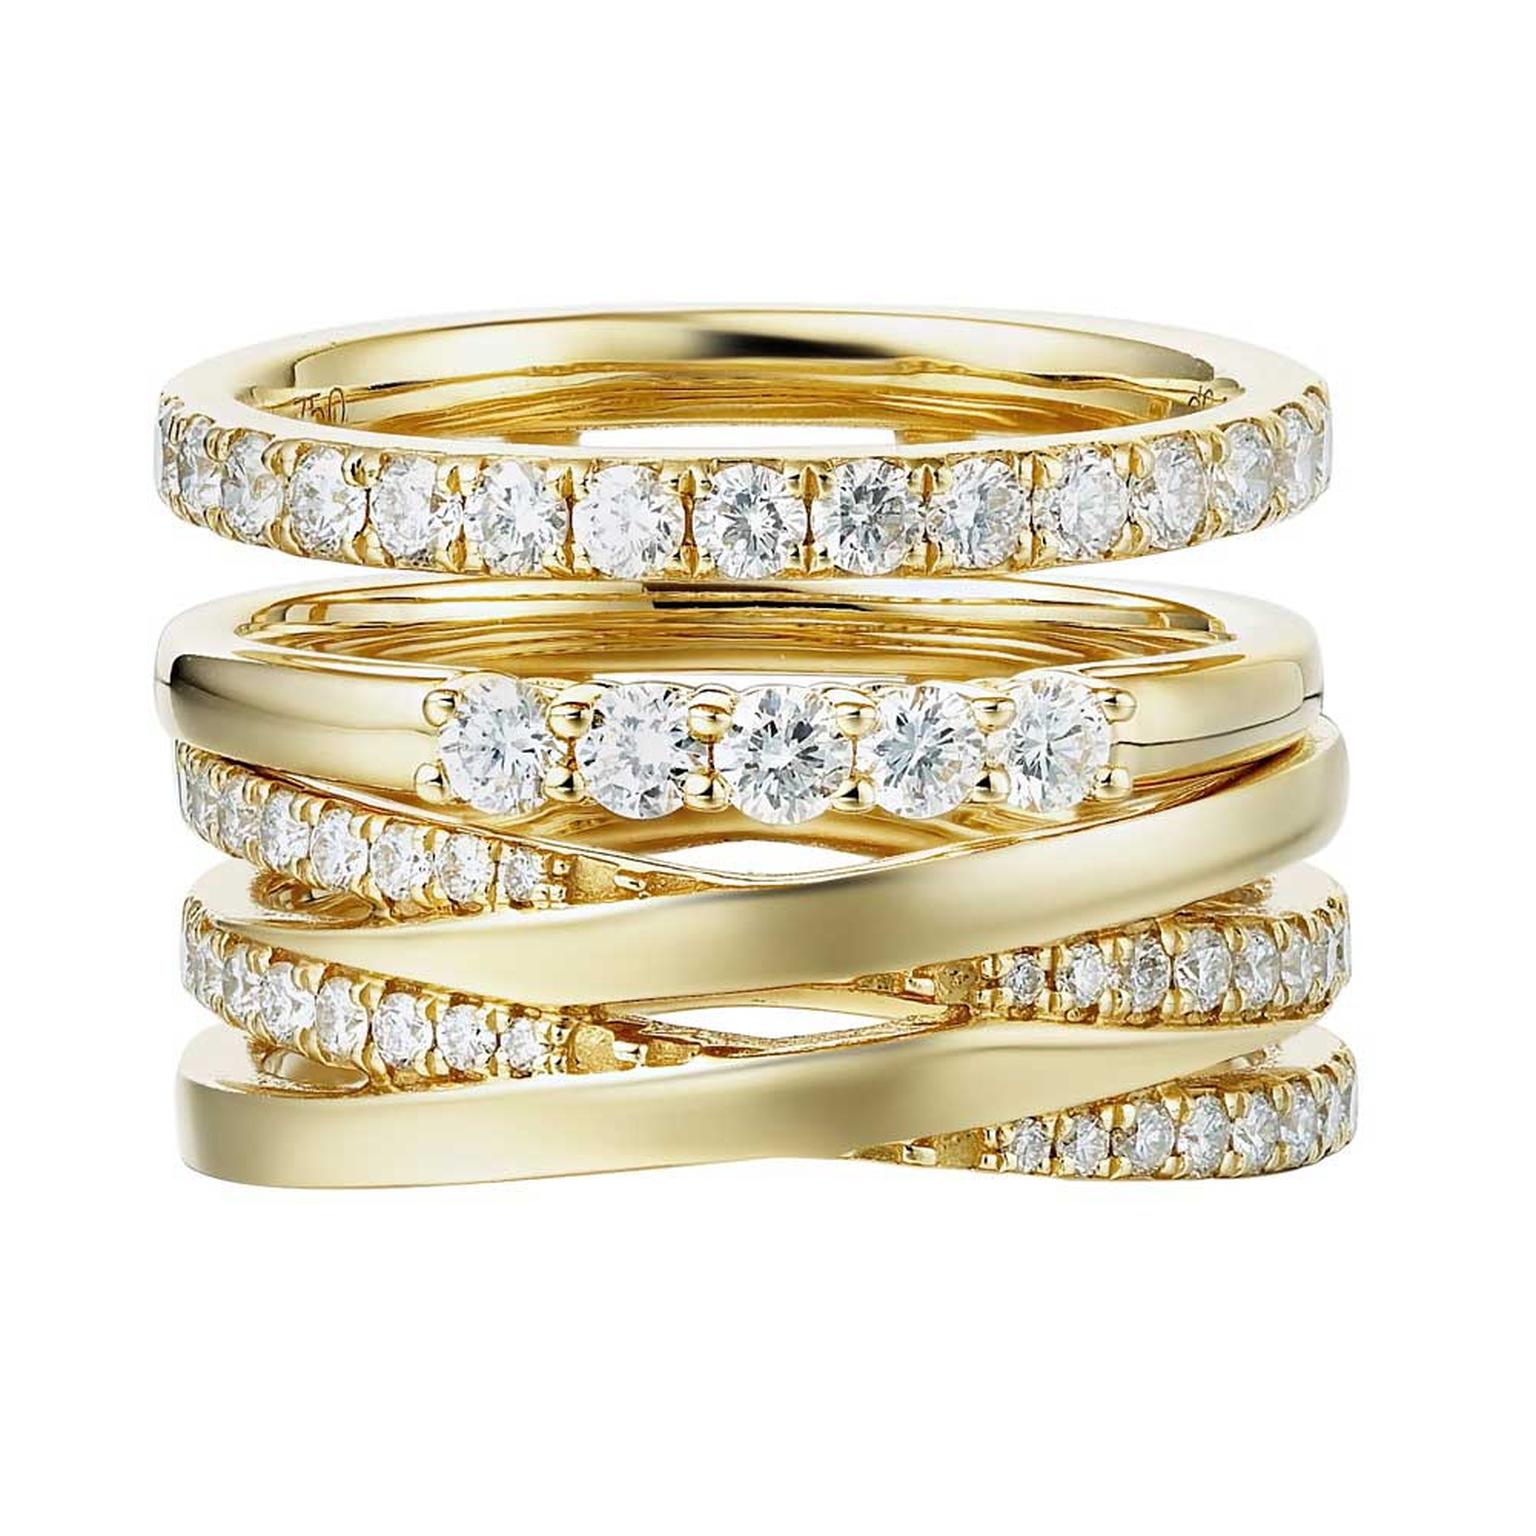 Sarah Zhuang yellow gold and diamond ring